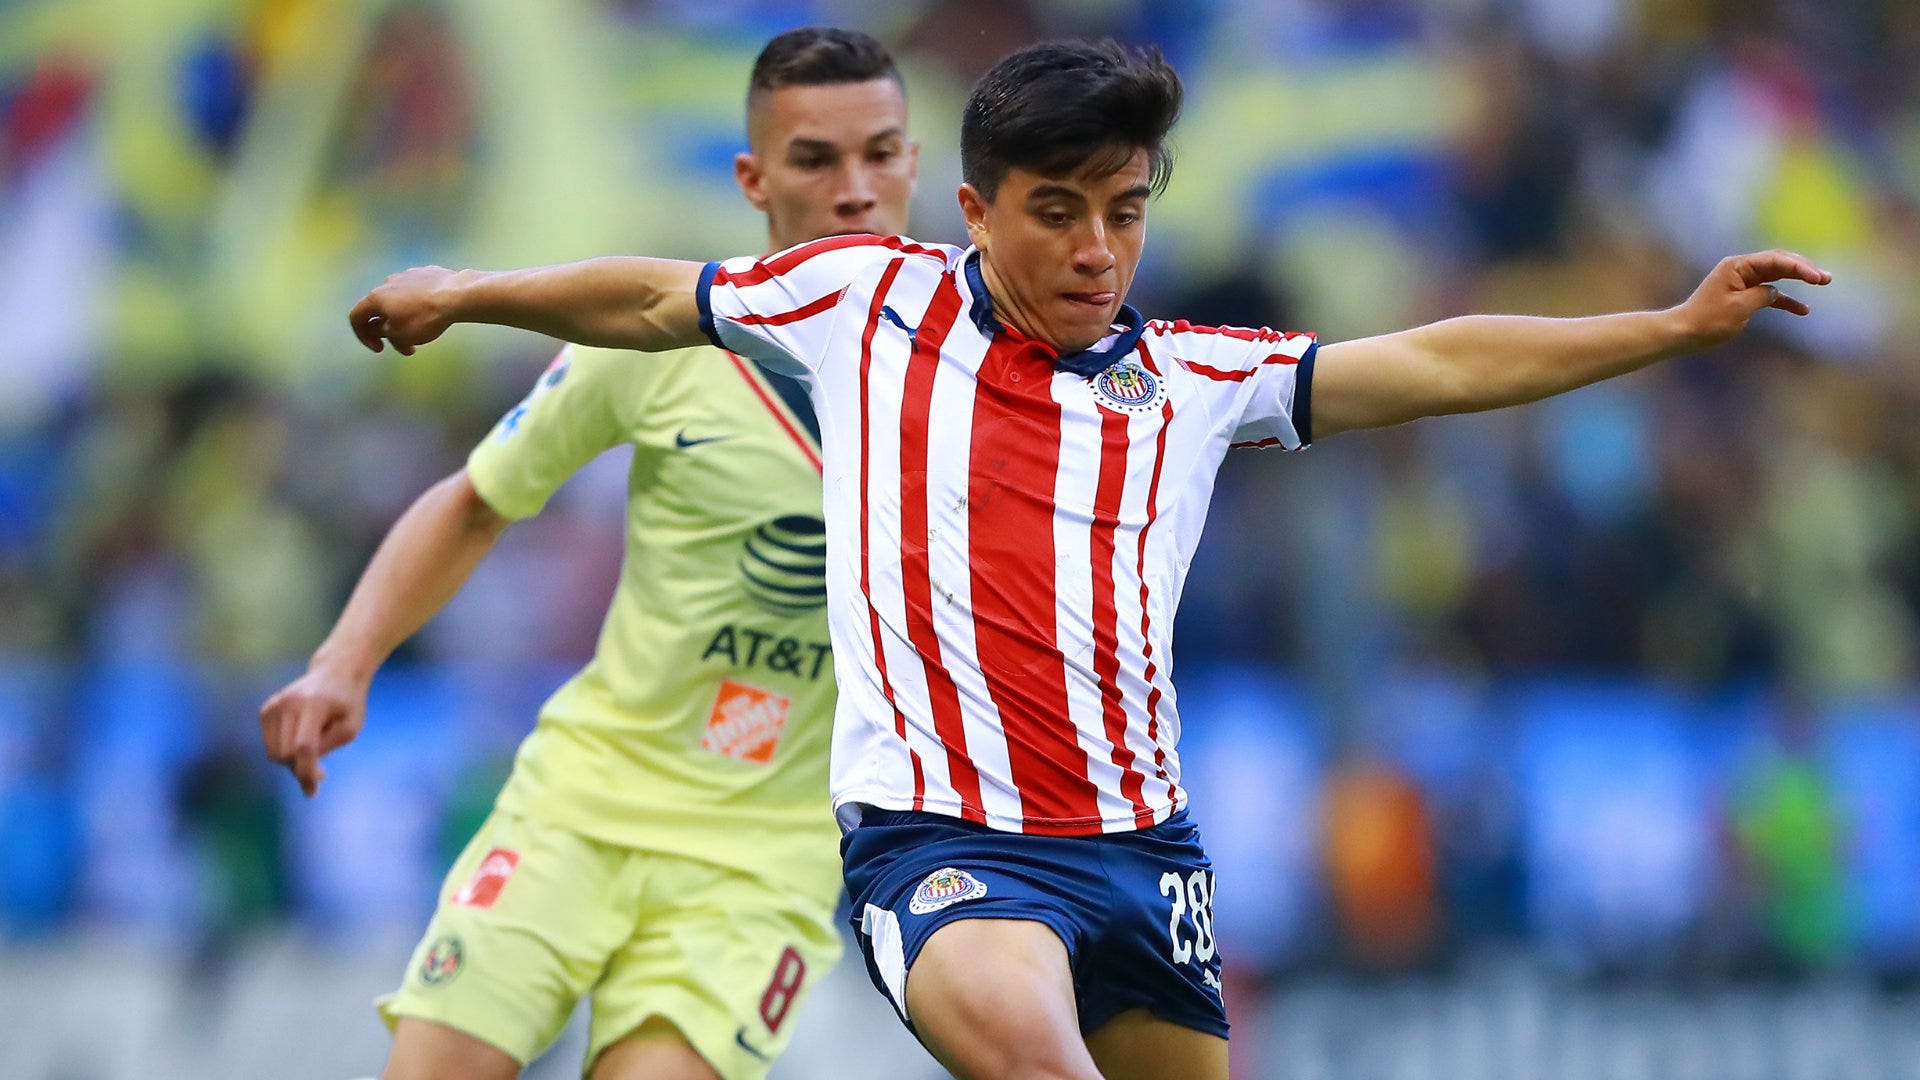 Fernando Beltrán: "Me corrieron del América" | Goal.com Colombia